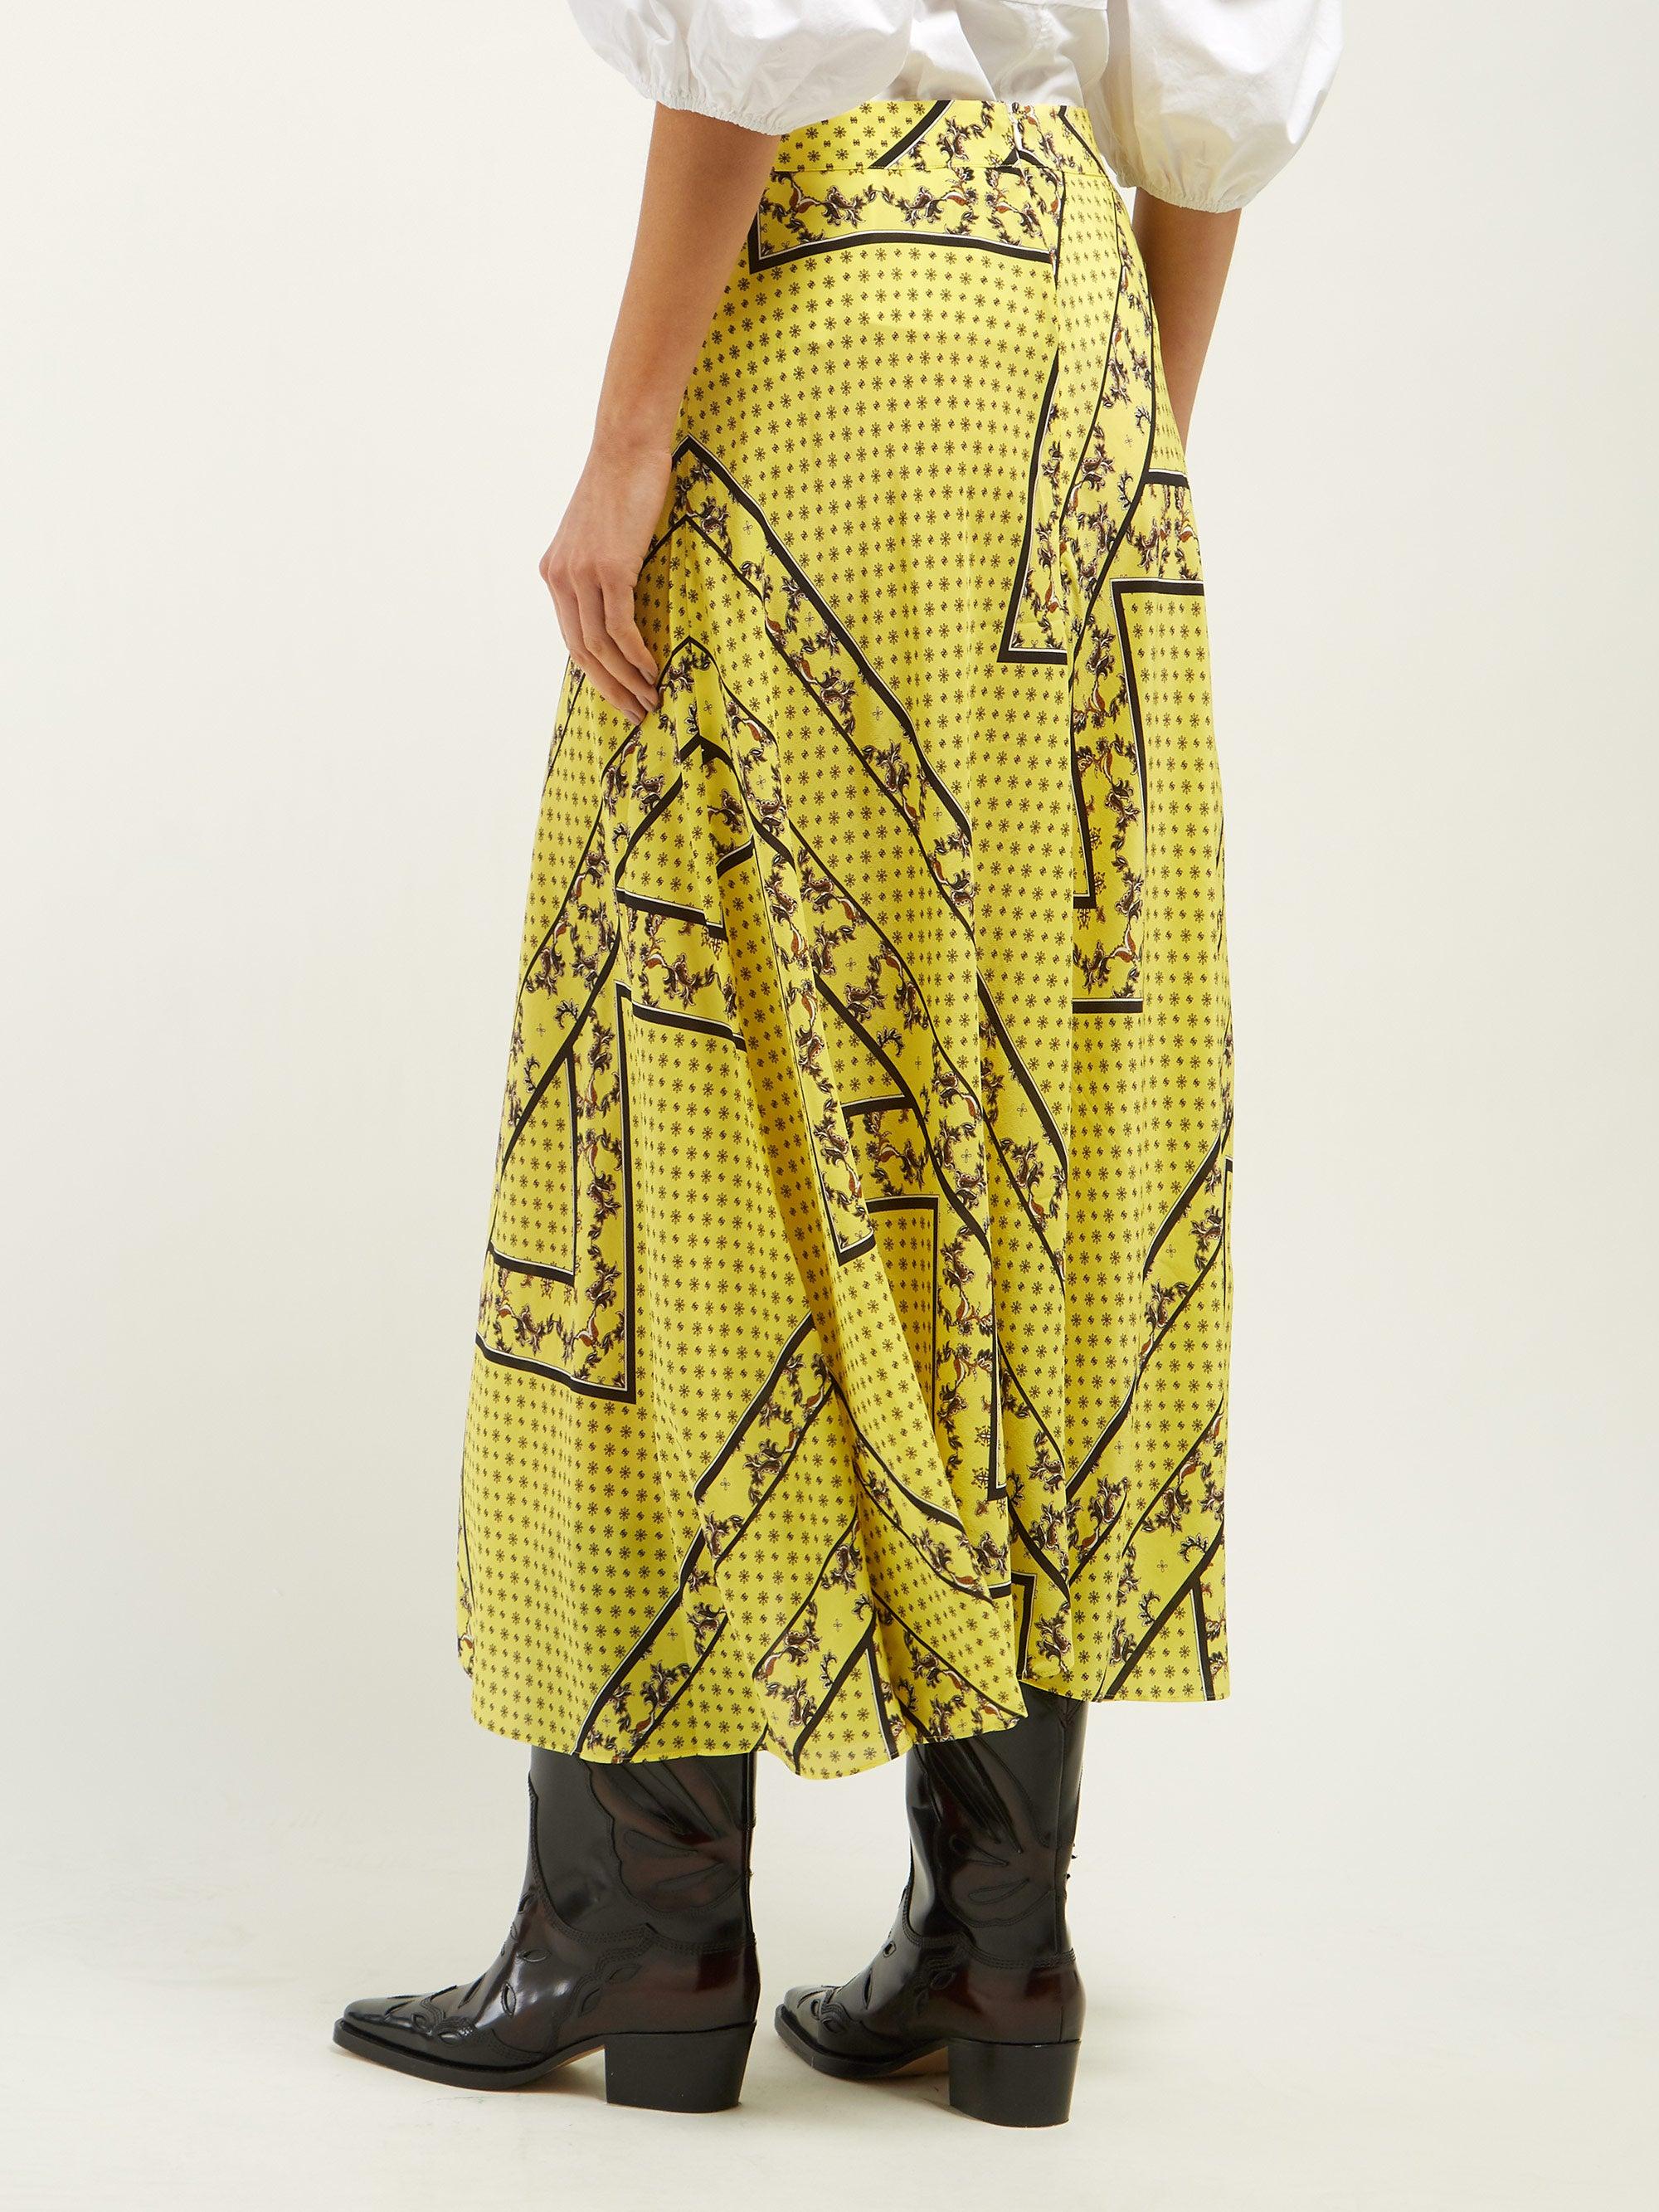 Ganni Silk Mix Skirt in Yellow/Print (Yellow) - Lyst